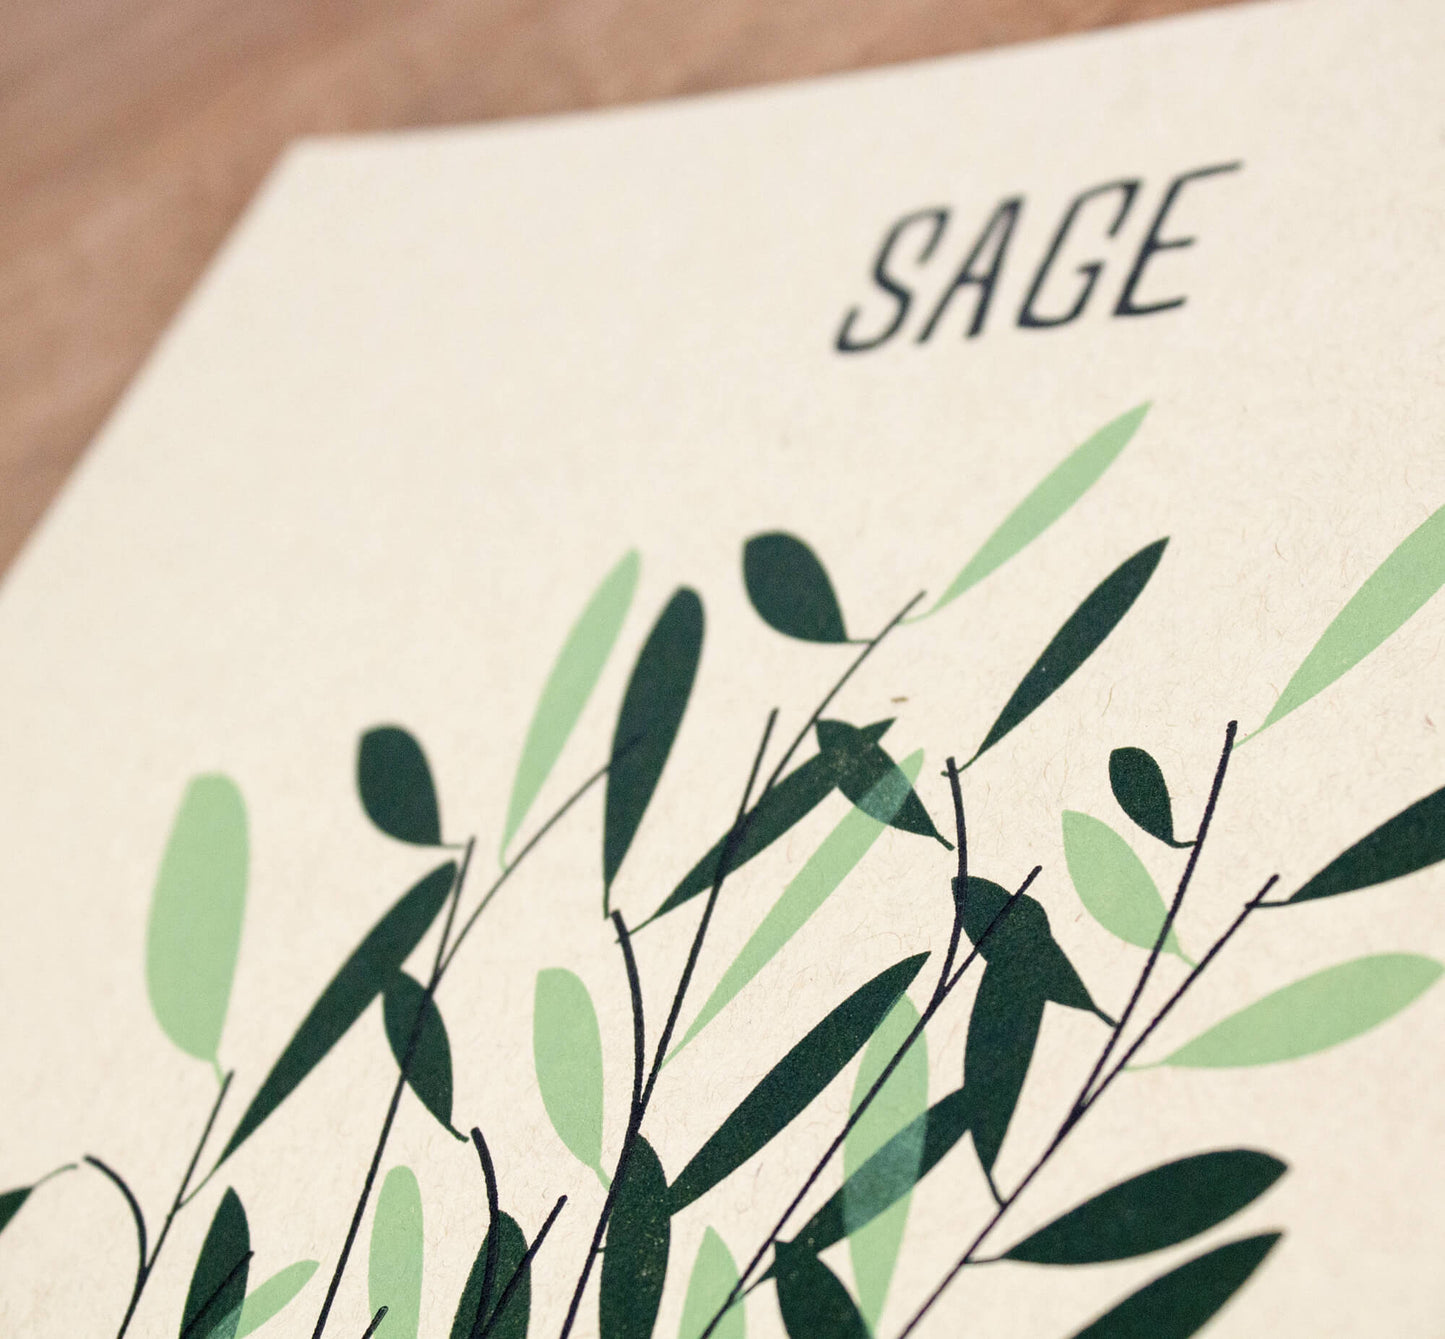 Sage 8" x 8" Letterpress Print